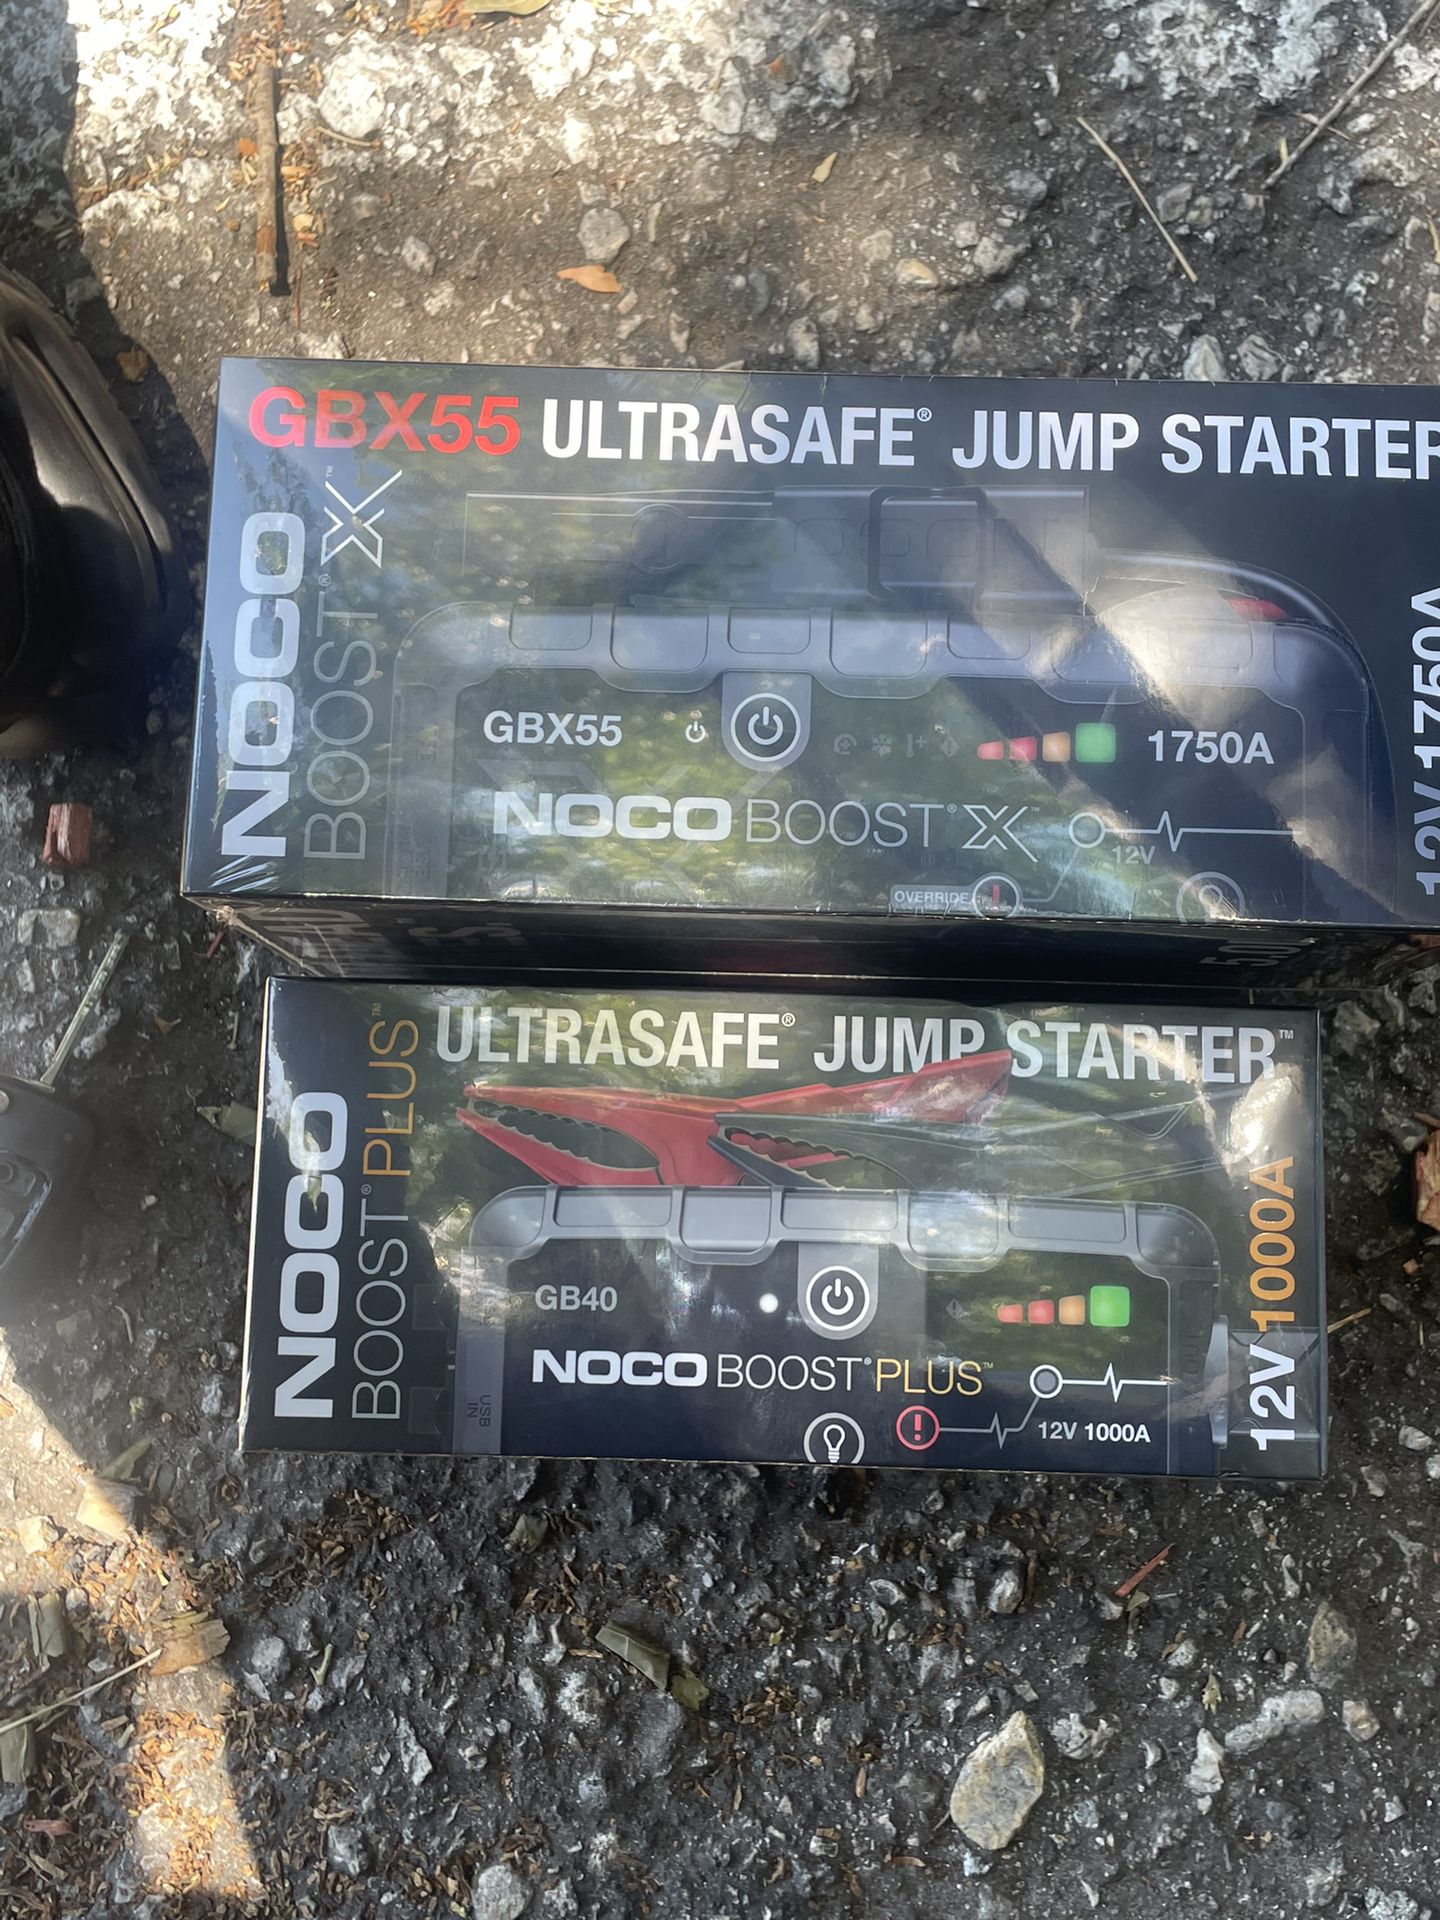 Ultrasafe Jump Starter Noco Boost Plus